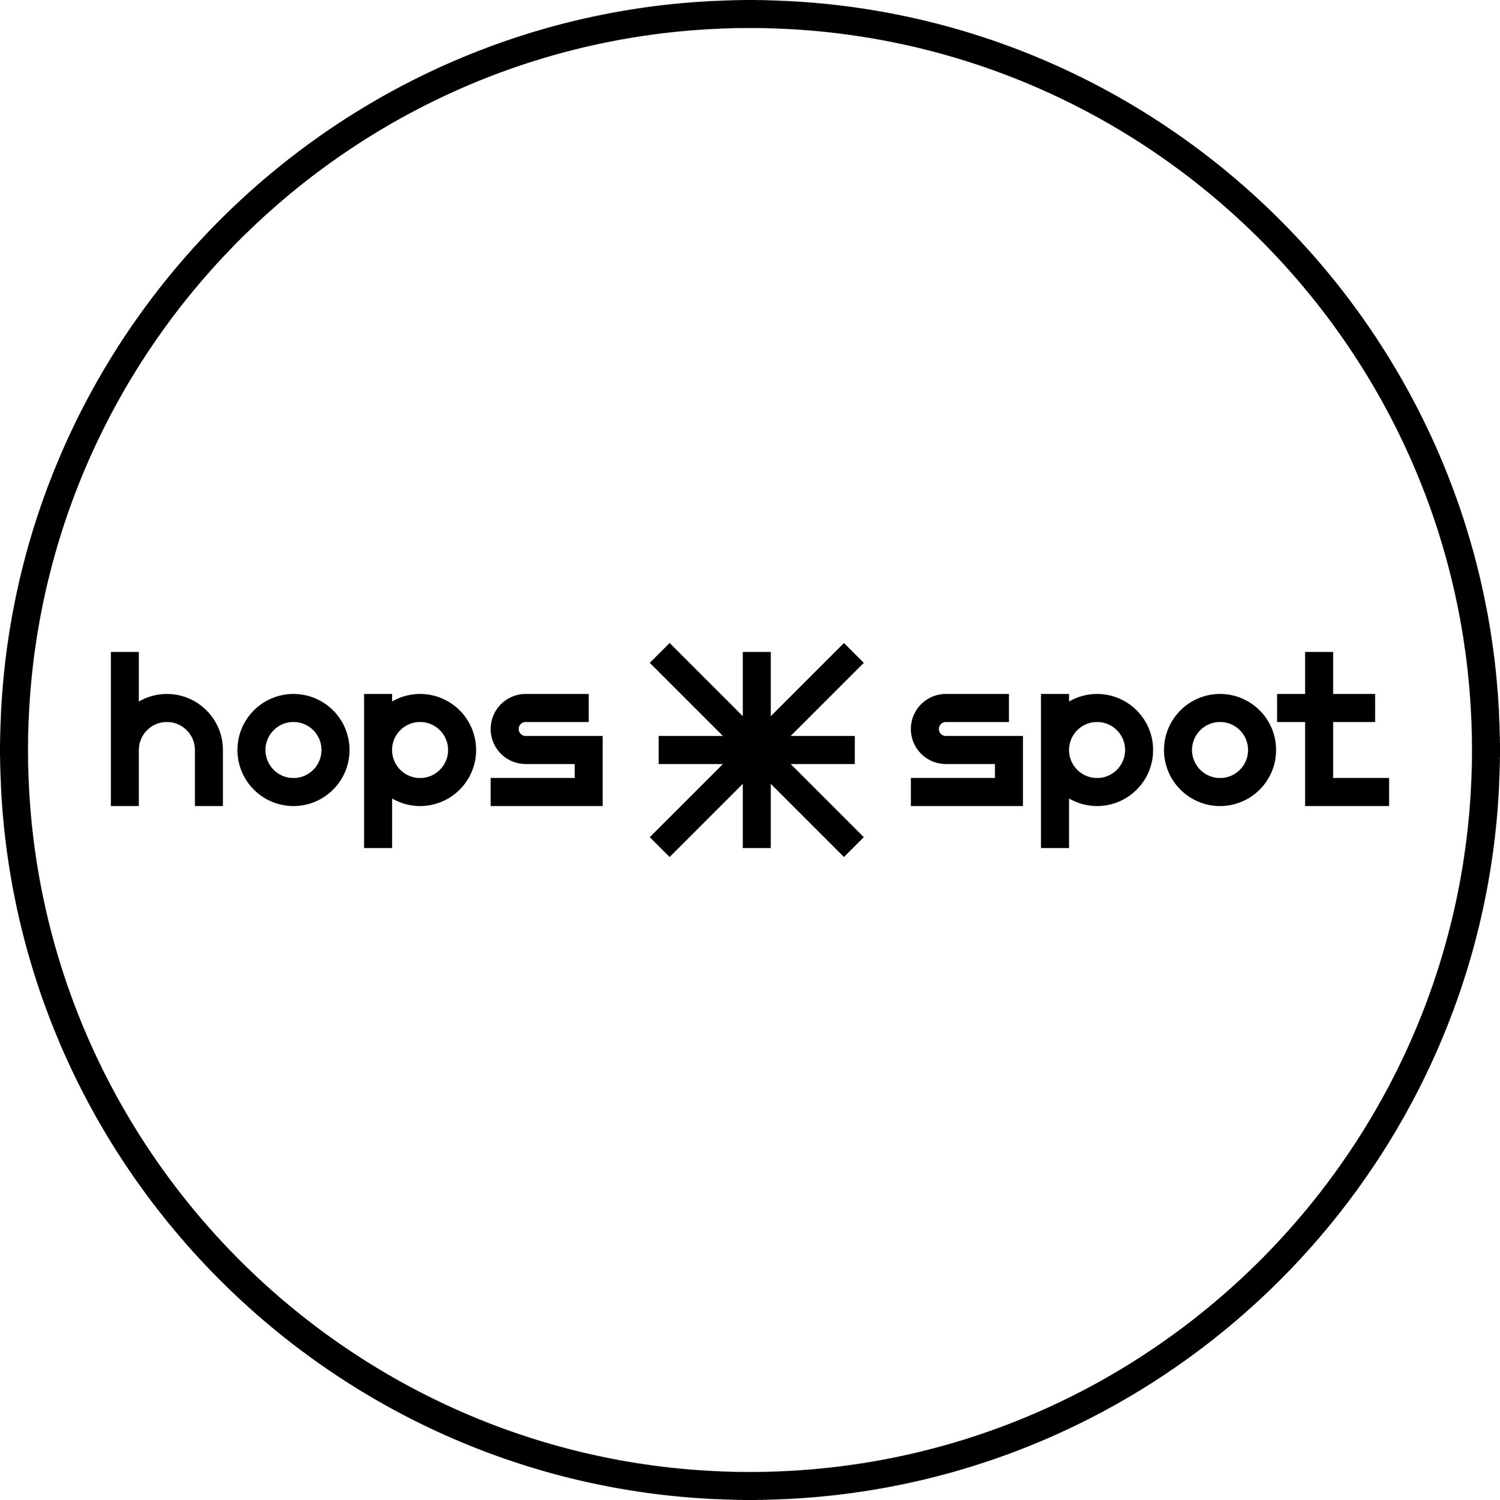 Hops spot